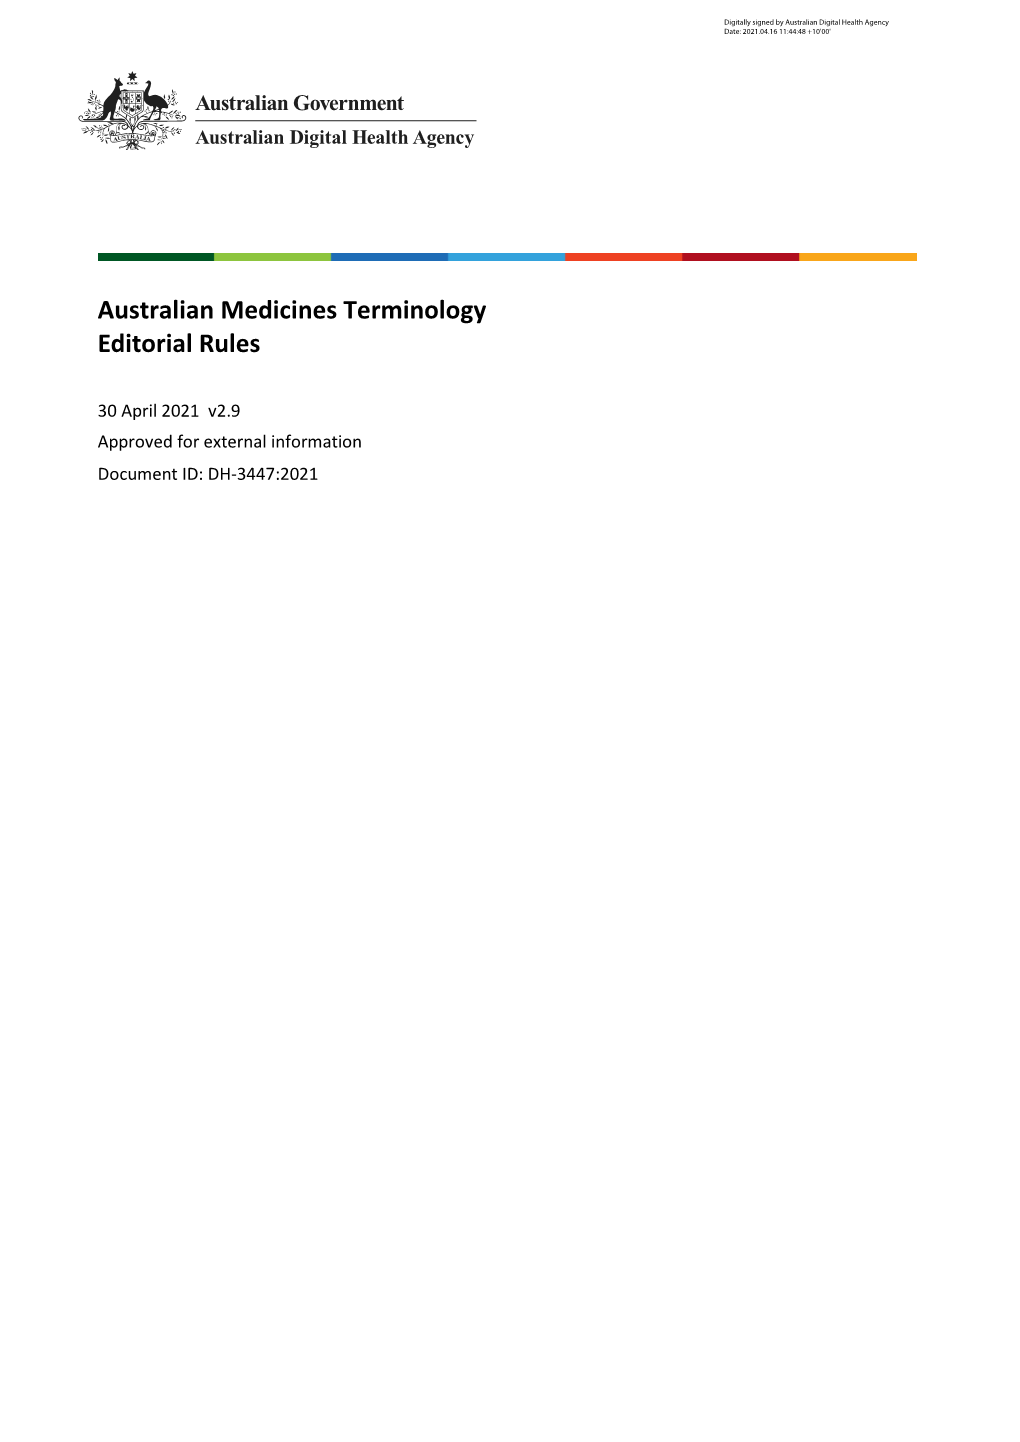 Australian Medicines Terminology Editorial Rules